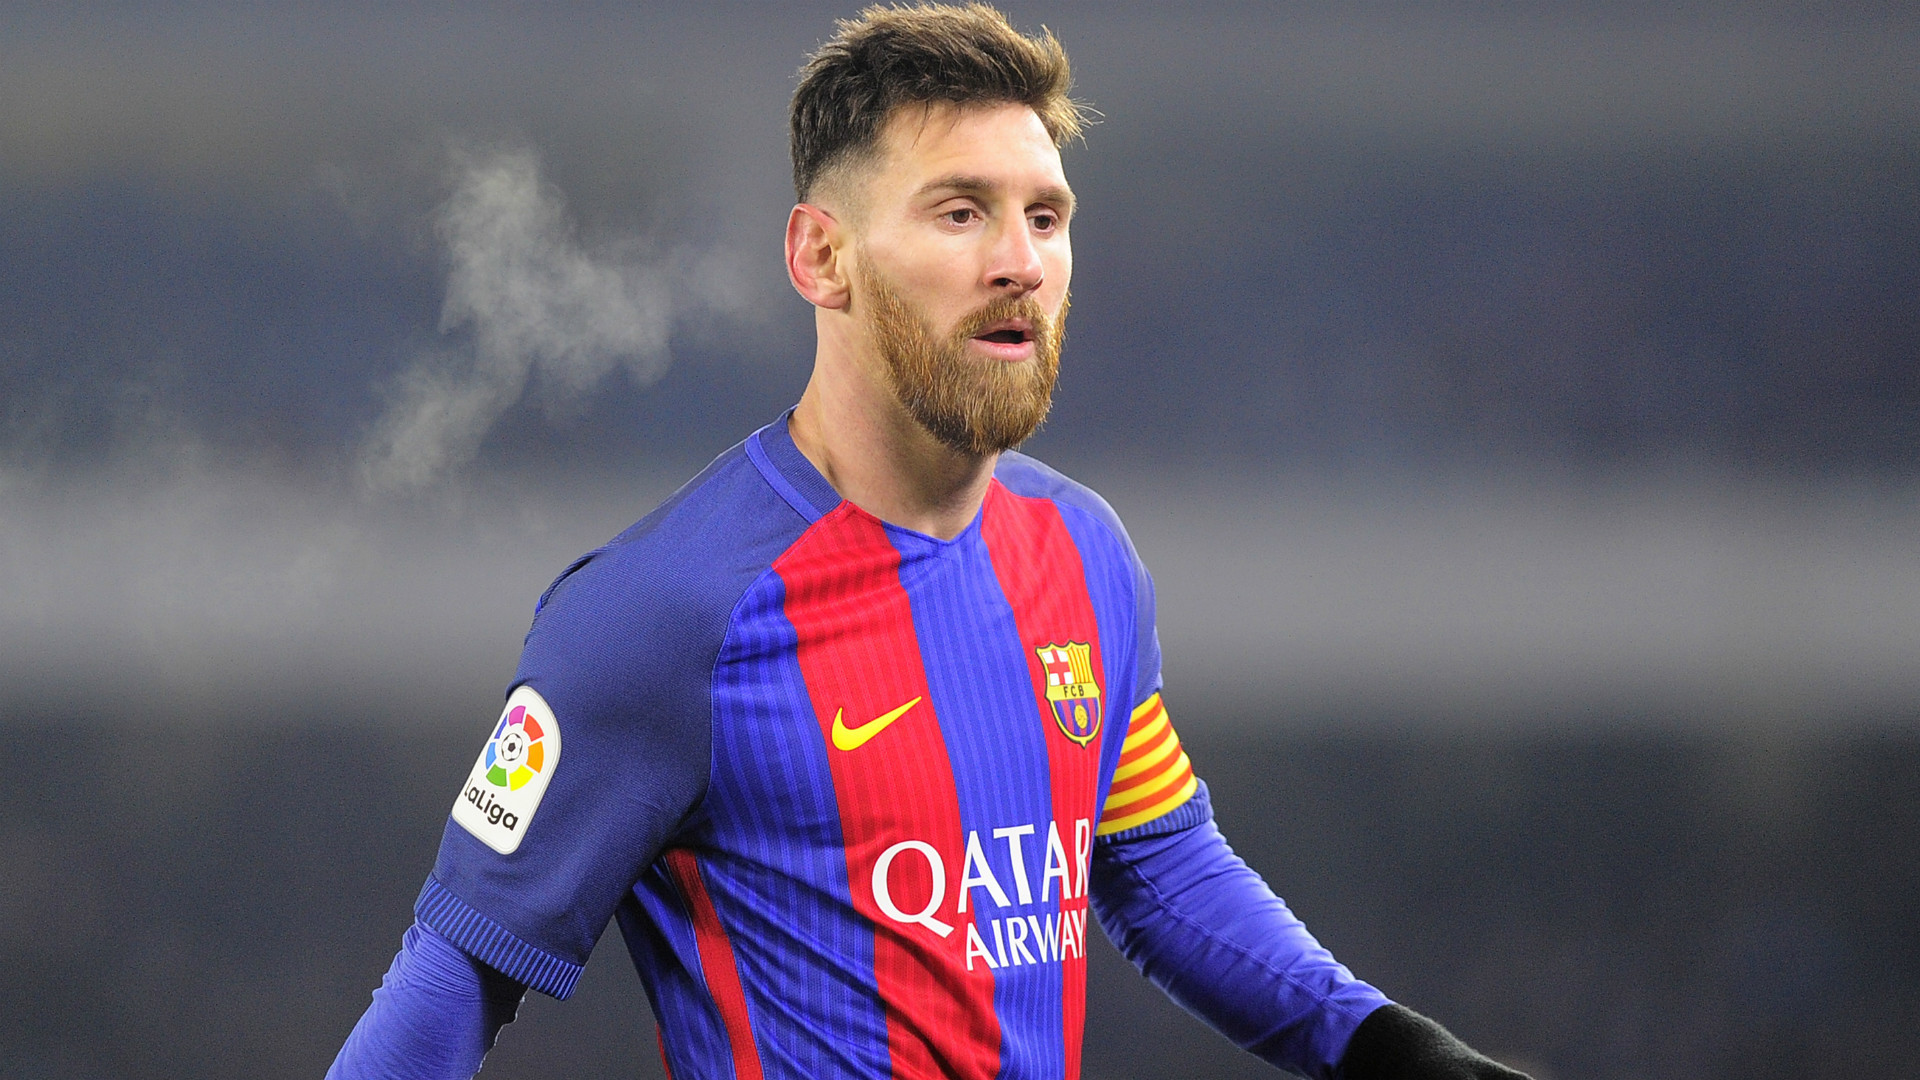 Messi Background Image